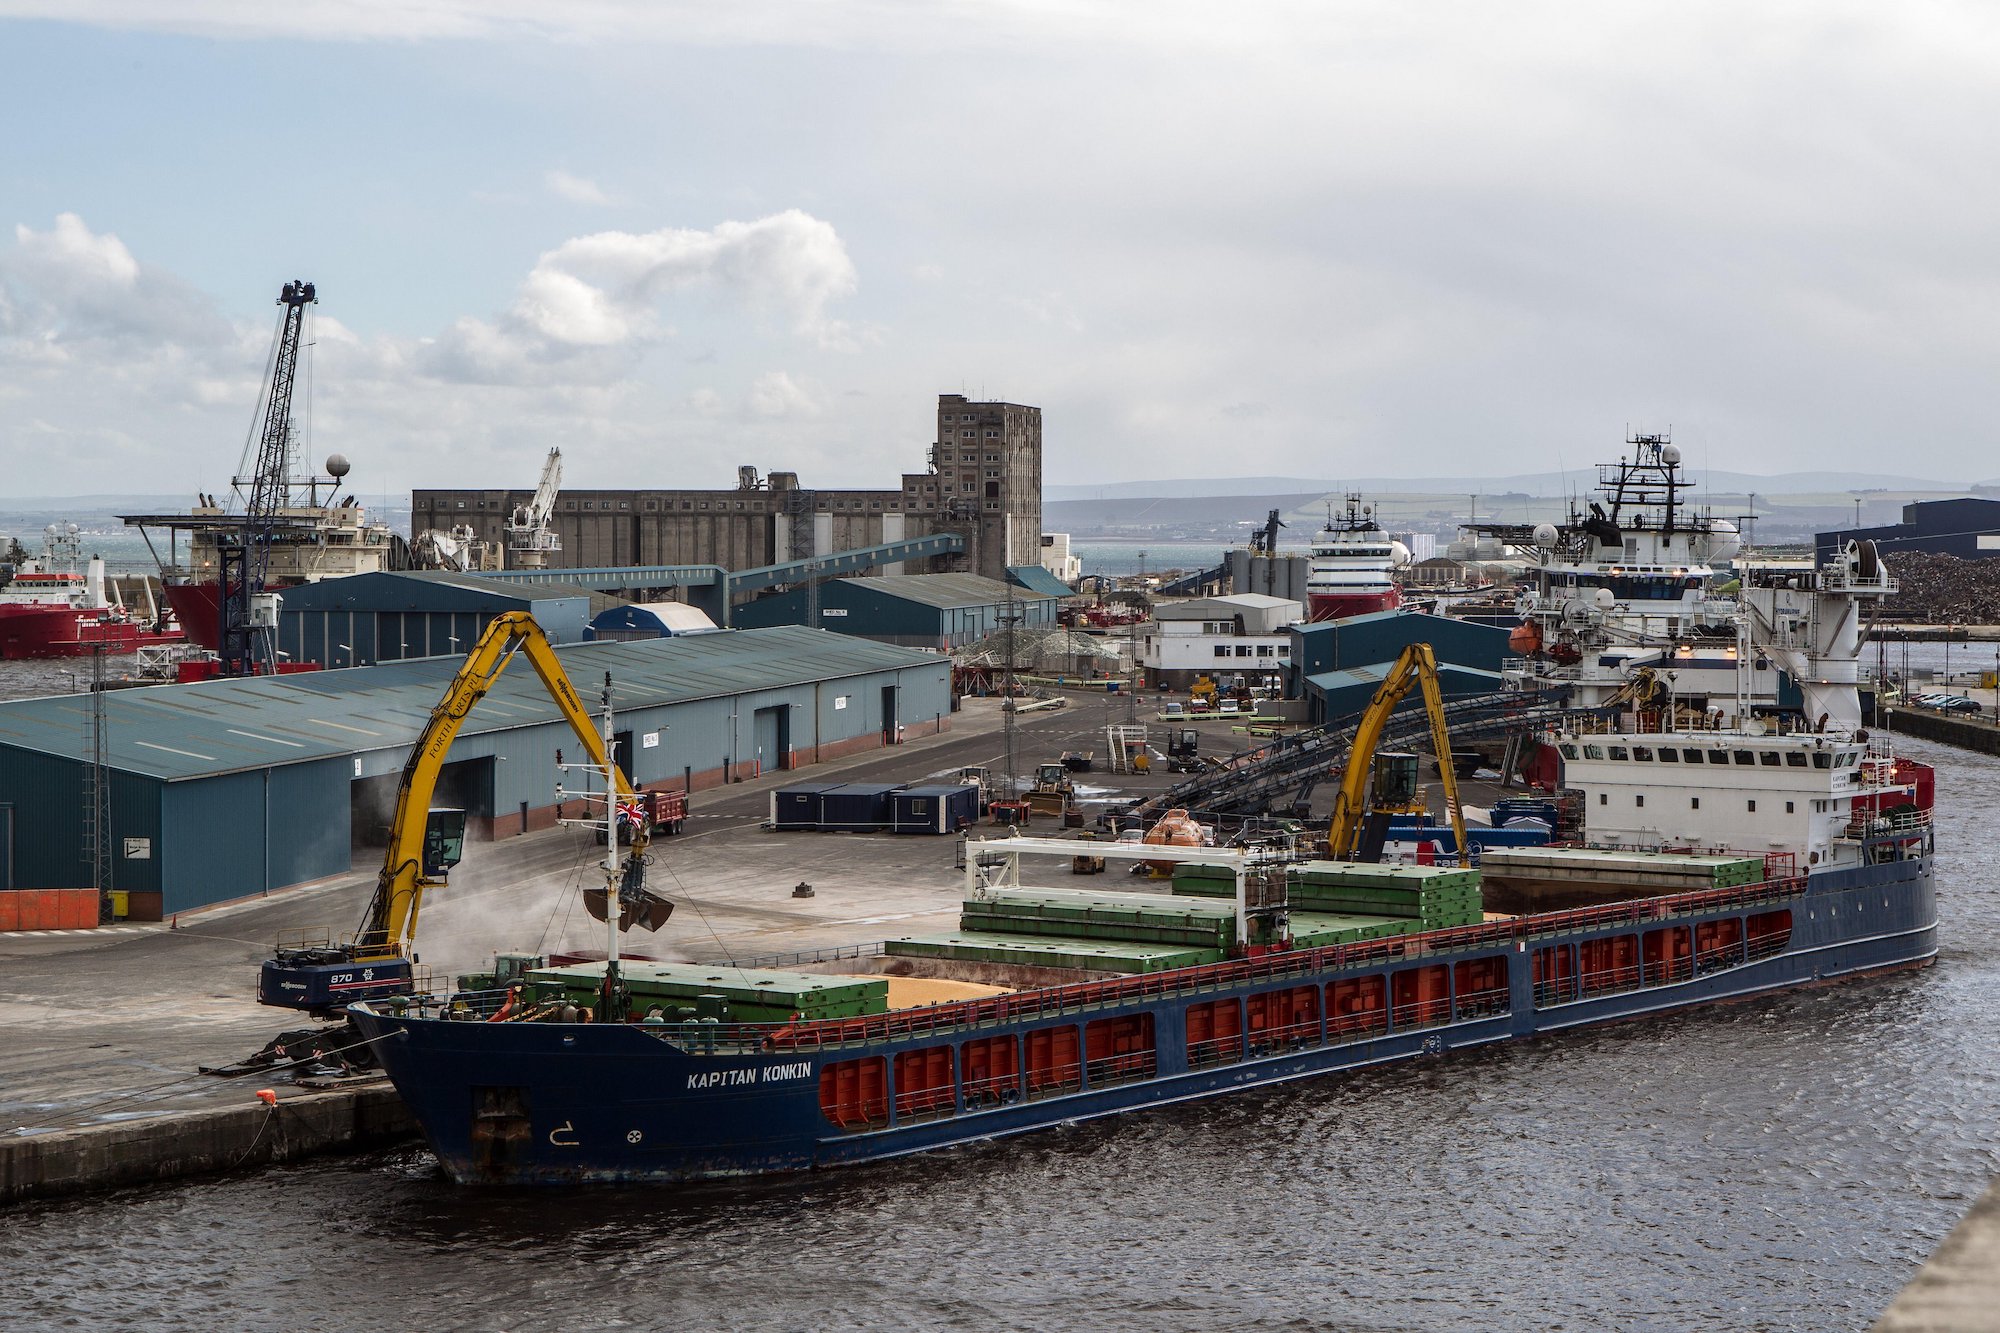 Montevideo port, Tanker being unloaded of cargo